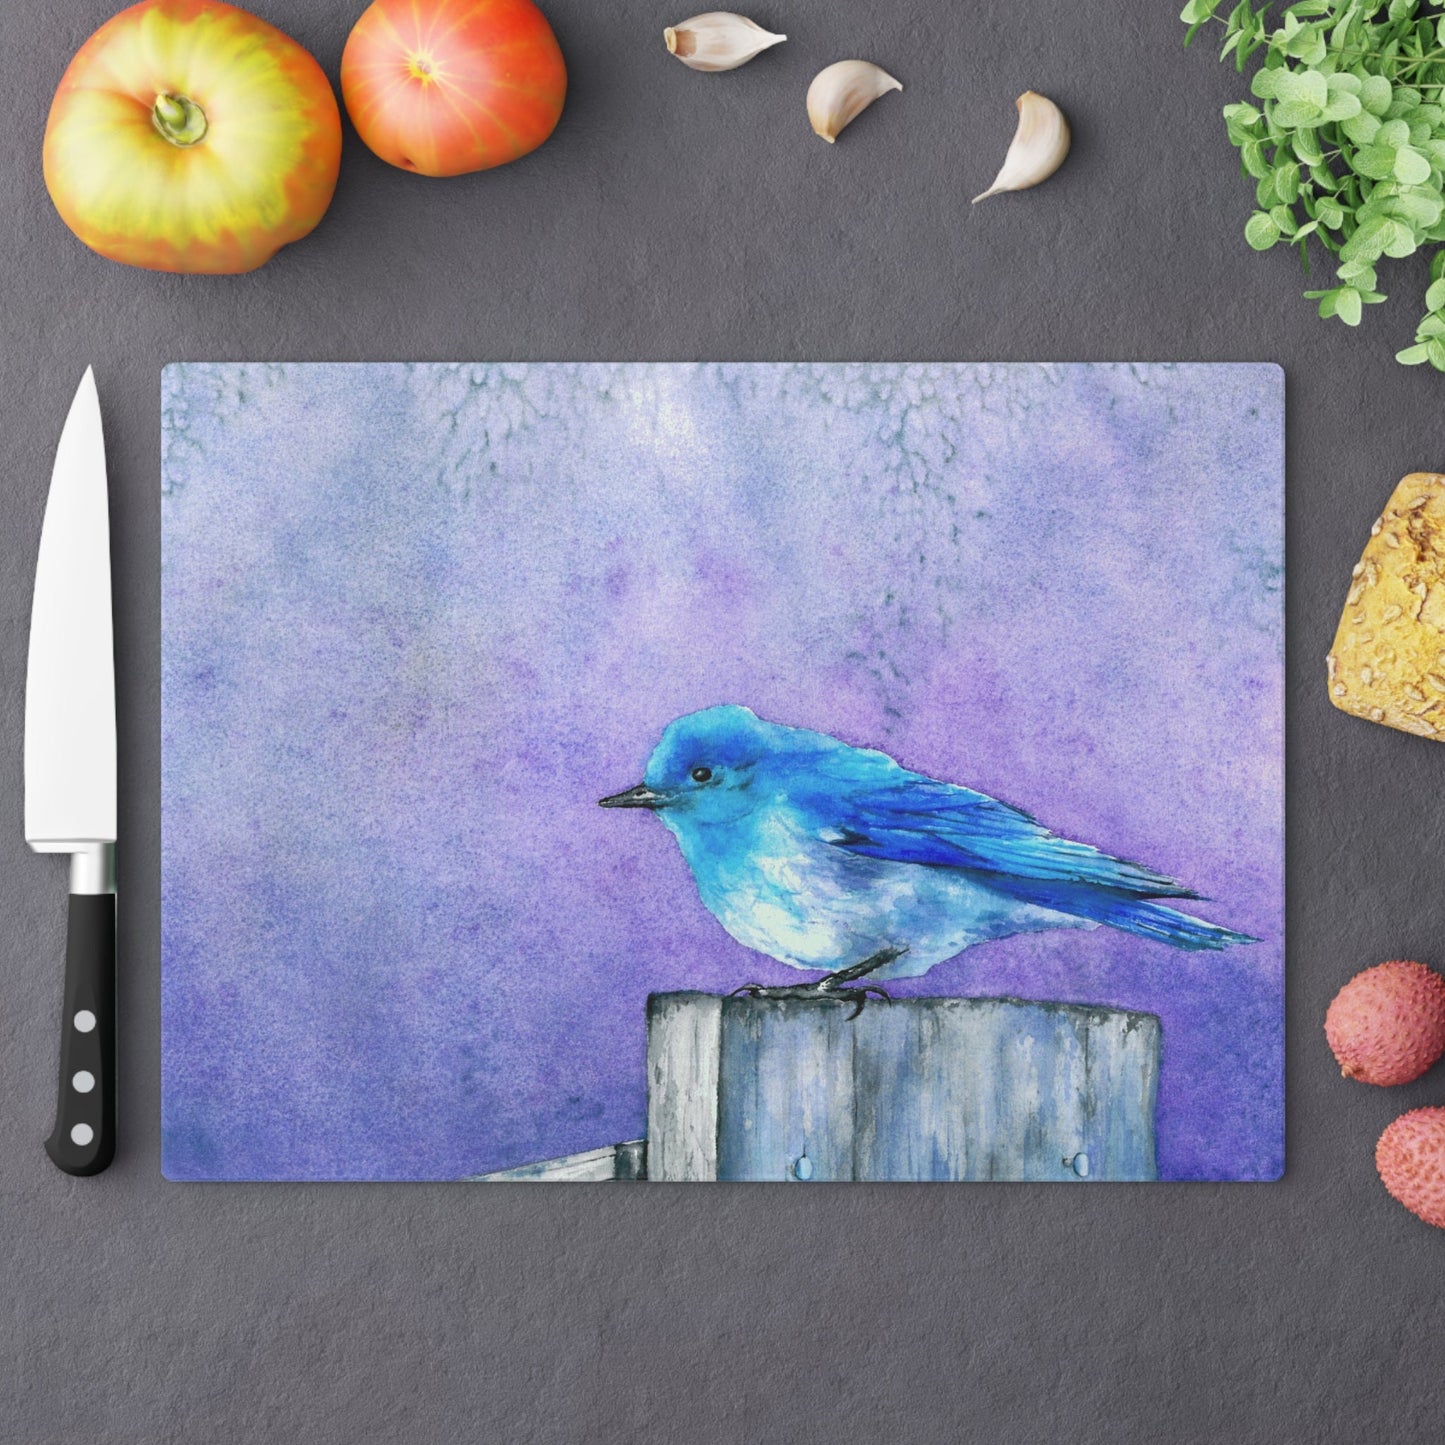 Bluebird Bliss Glass Cutting Board - Wildlife Chopping Board - Artistic Kitchen Decor